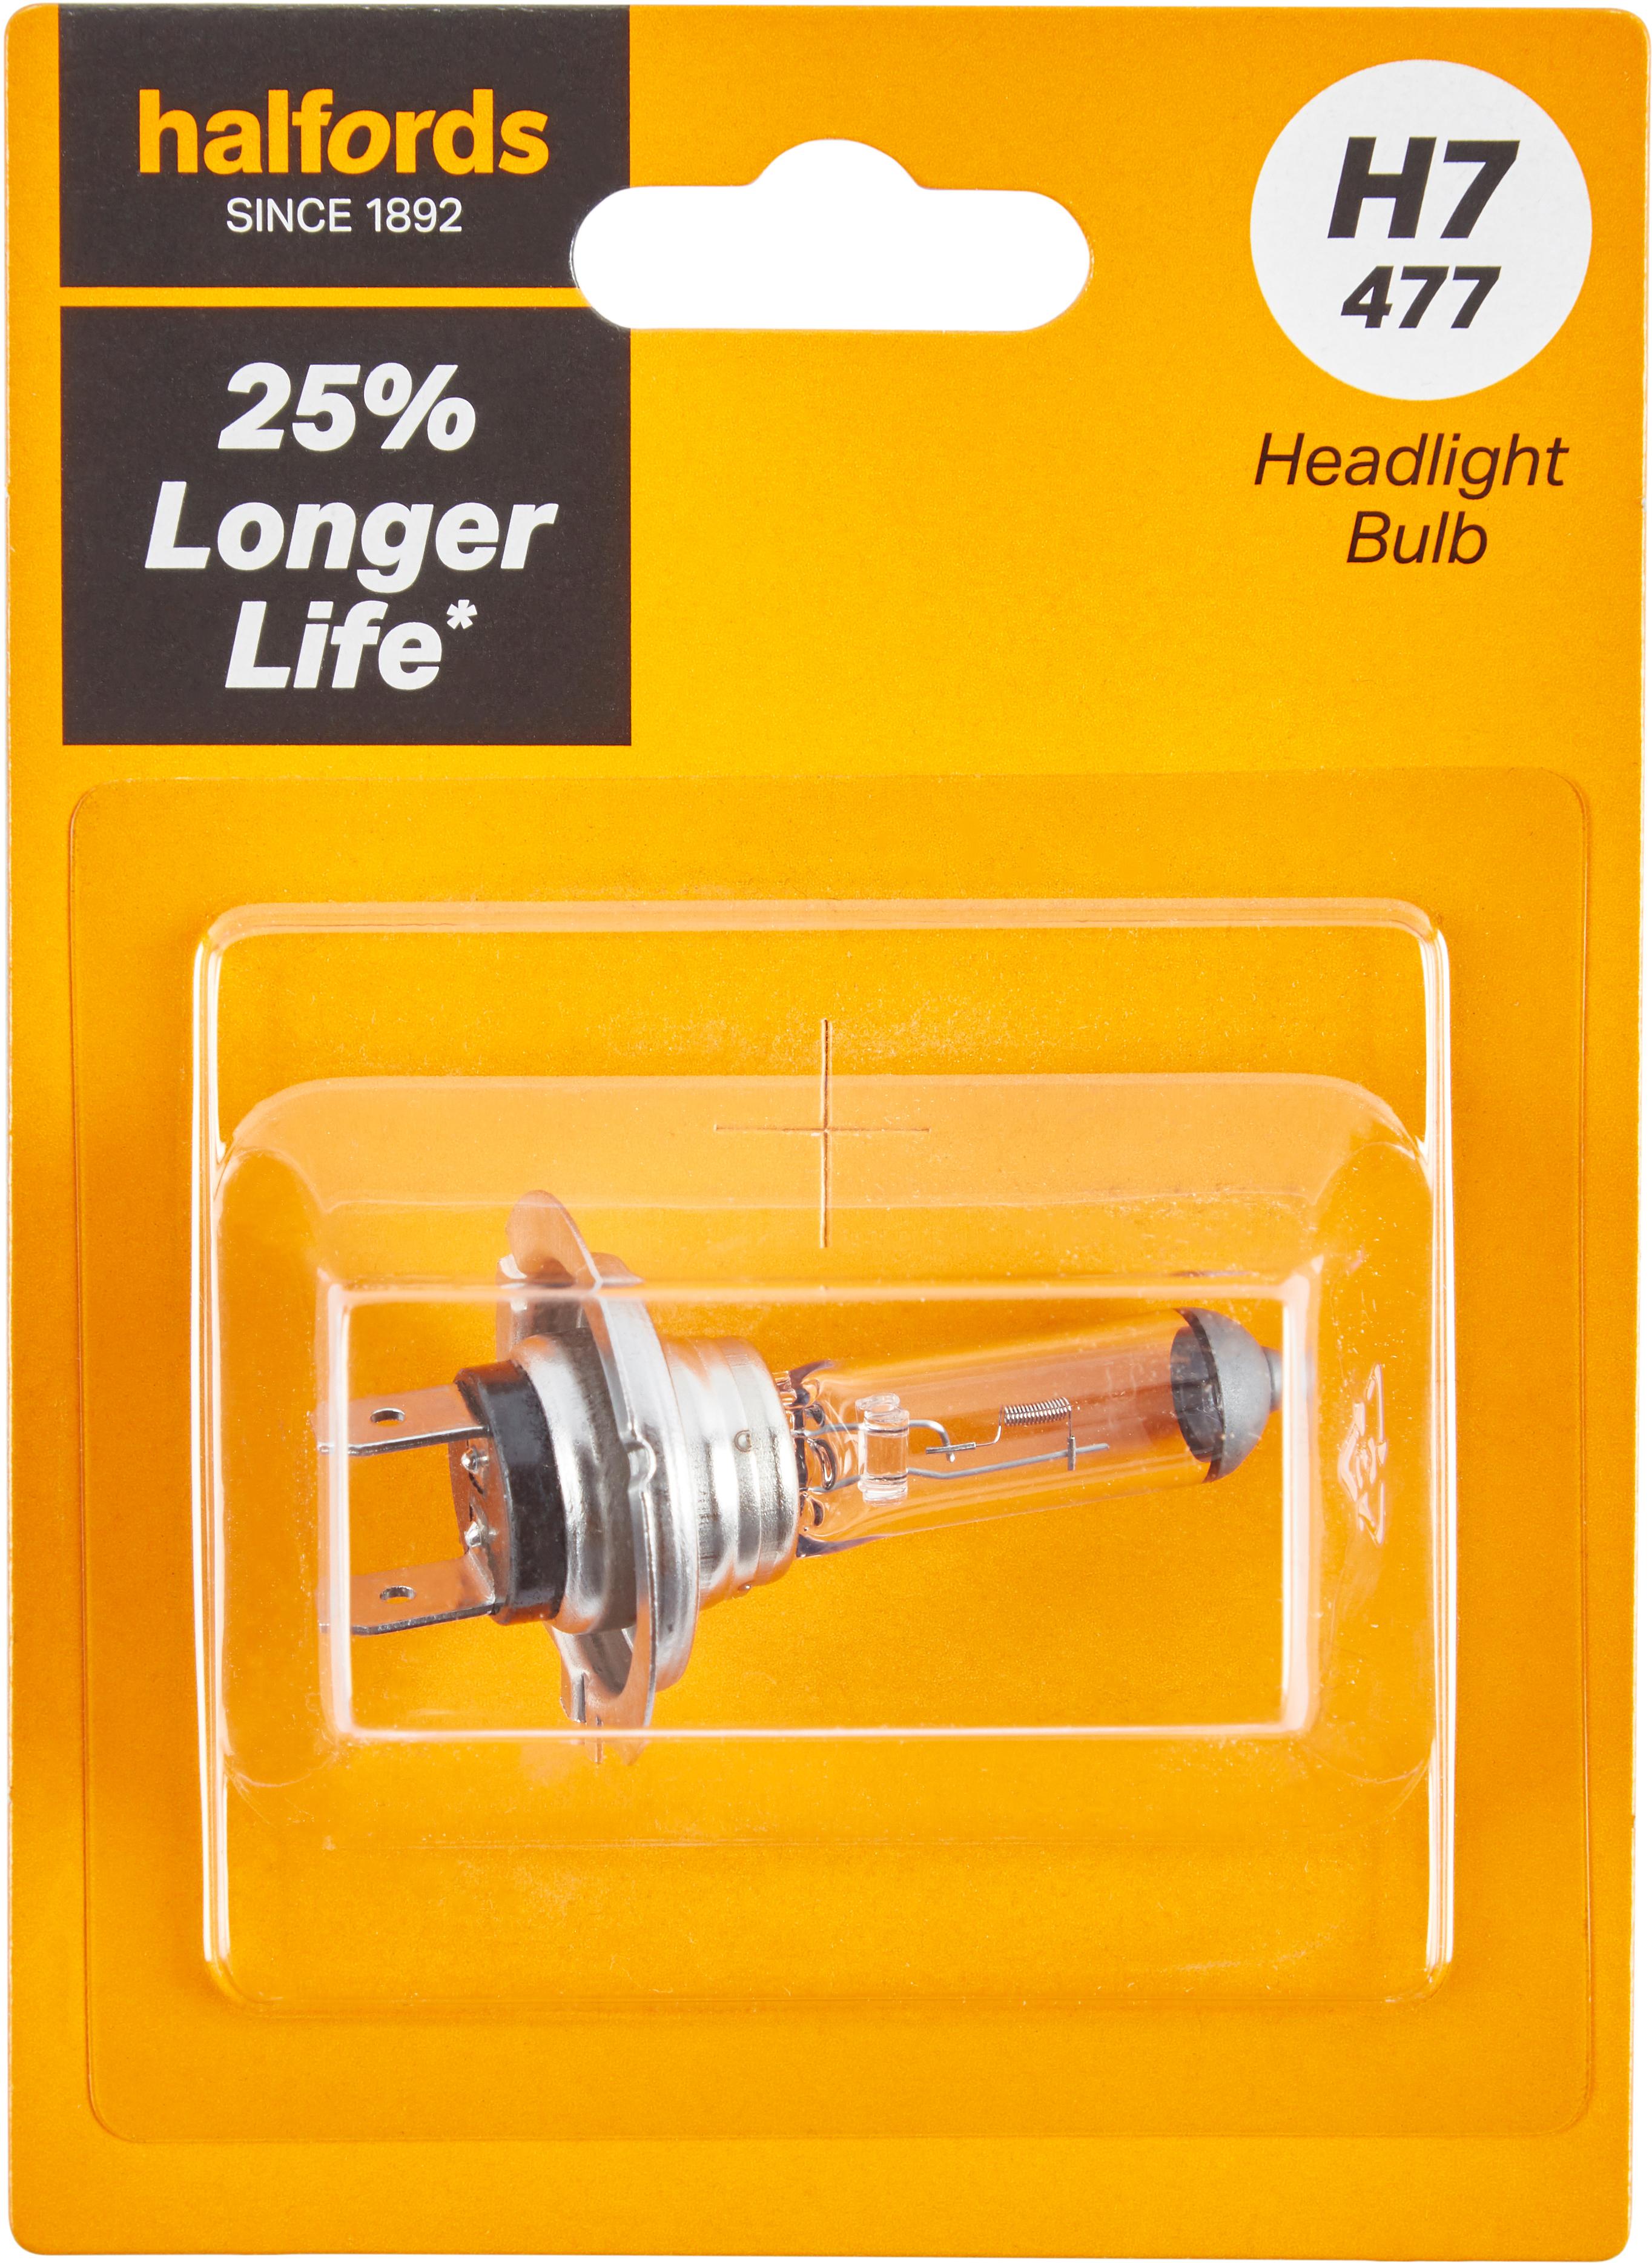 H7 477 Car Headlight Bulb Halfords +25 Percent Longer Life Single Pack